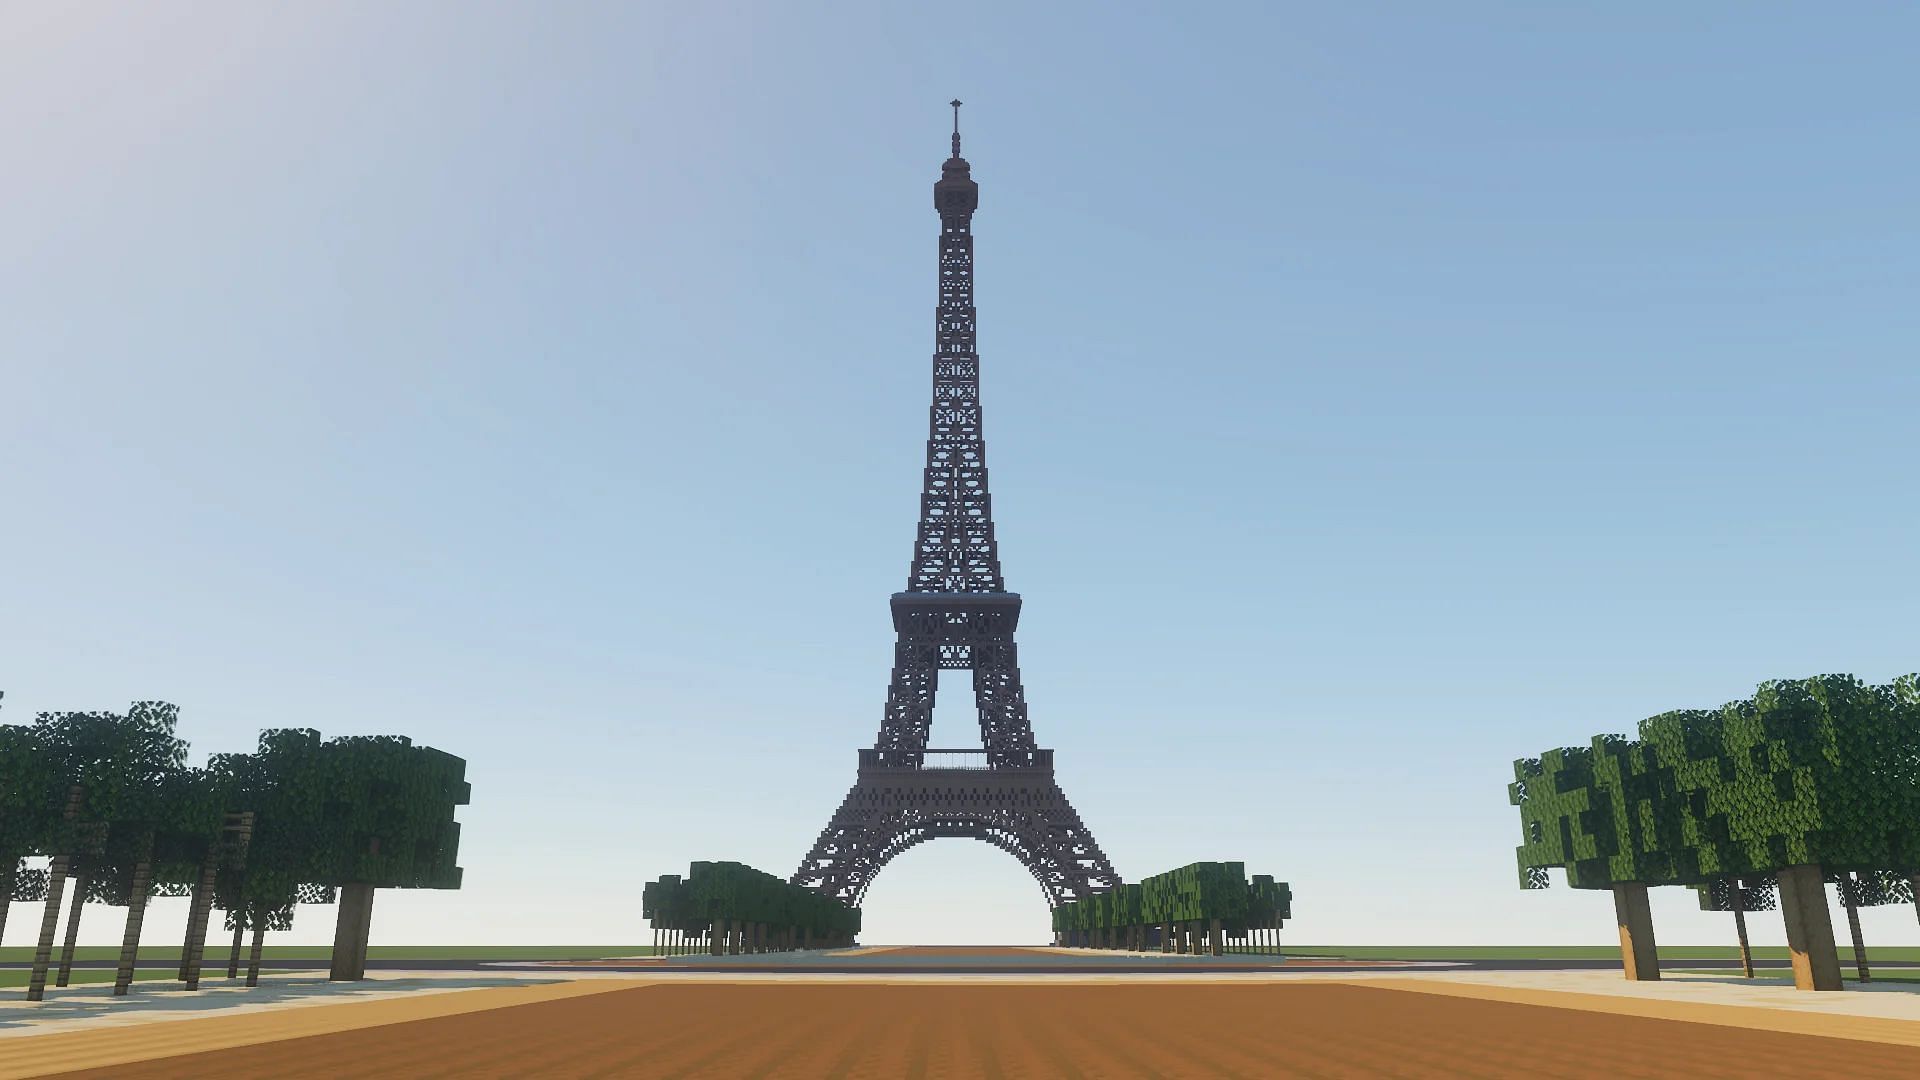 Minecraft player builds Eiffel Tower using mud bricks